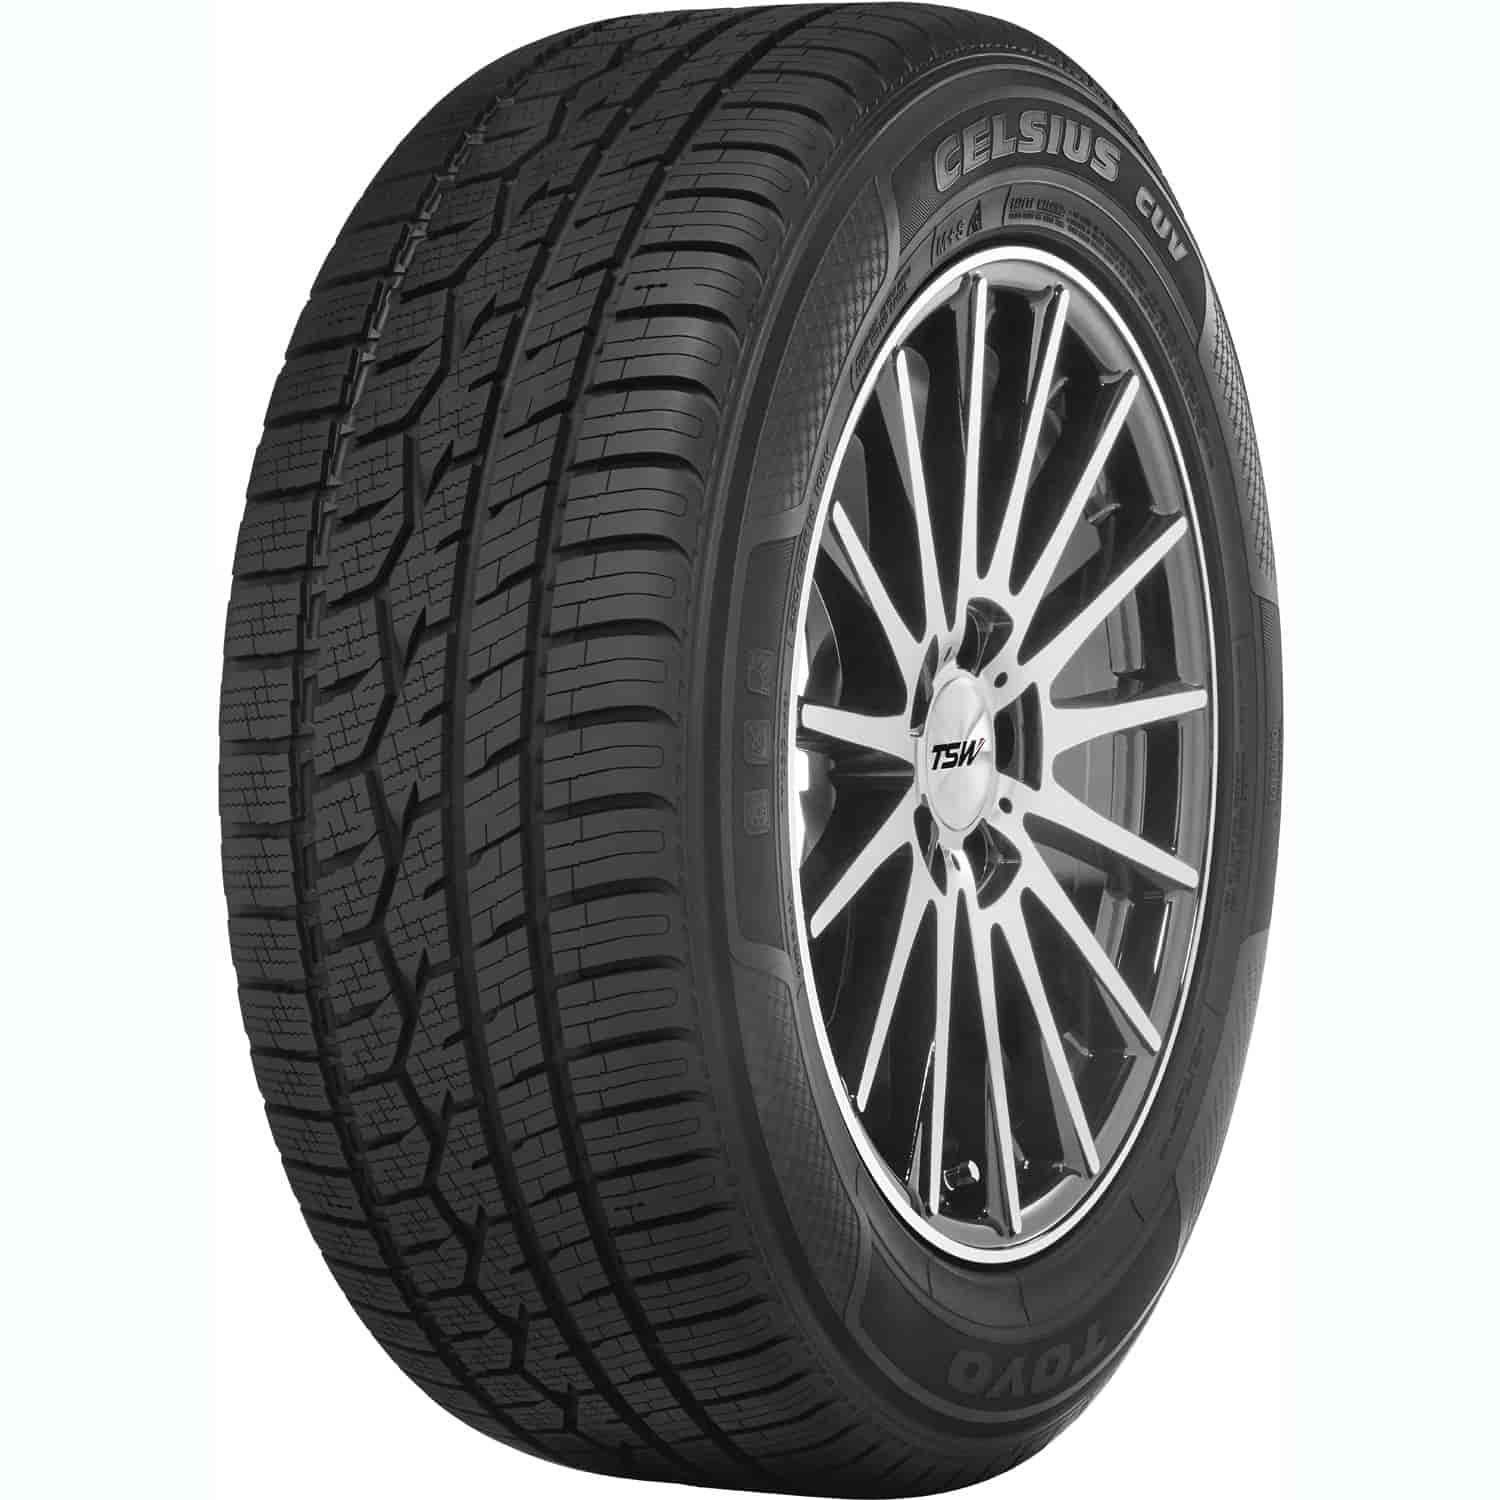 Celsius CUV Tire 275/40R20